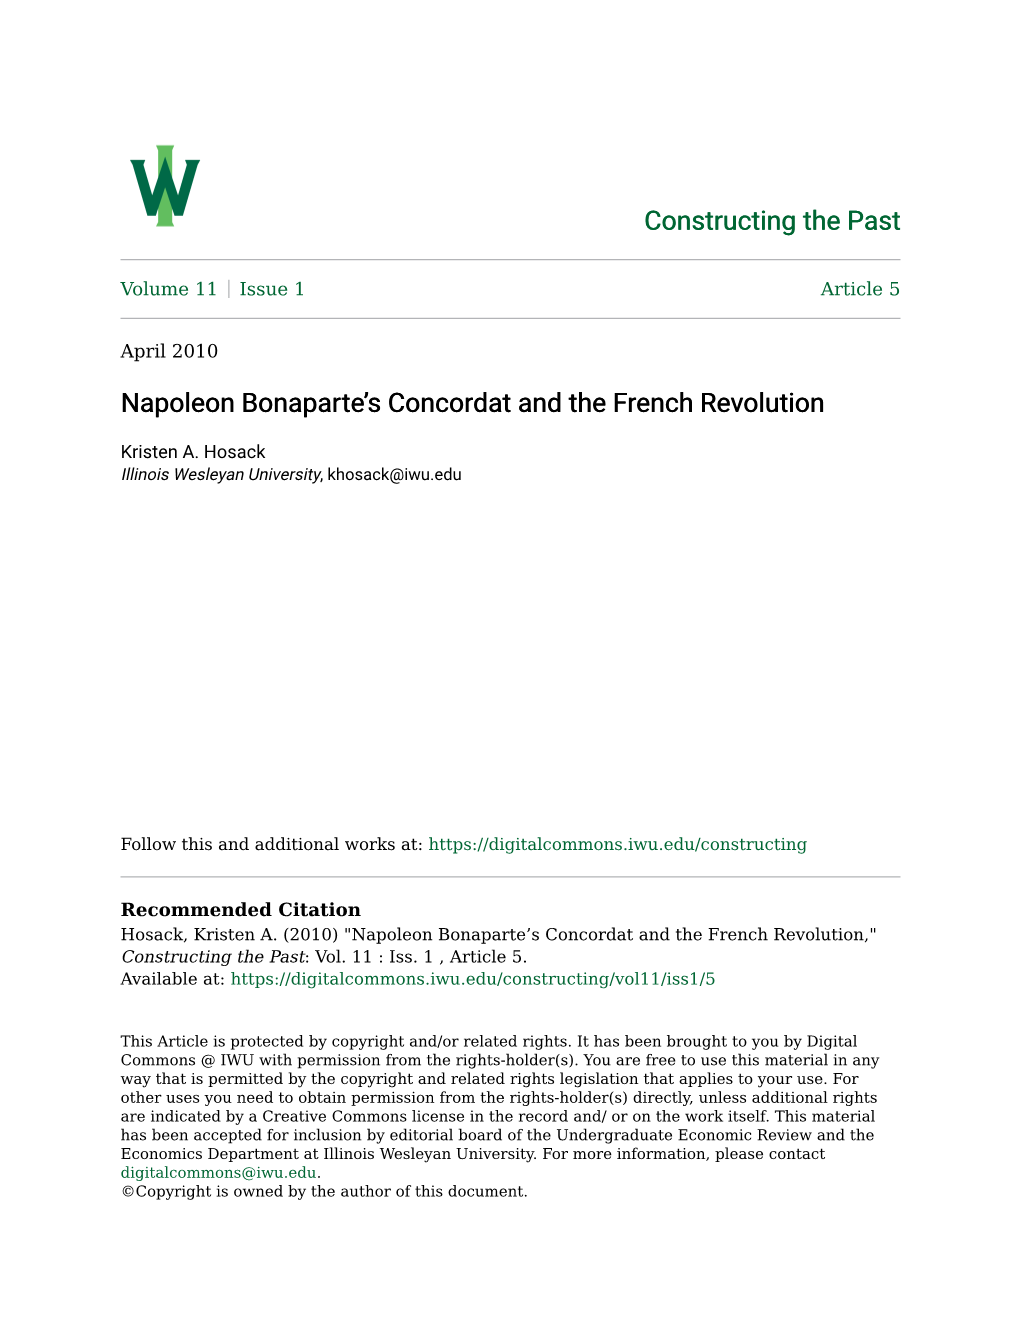 Napoleon Bonaparte's Concordat and the French Revolution